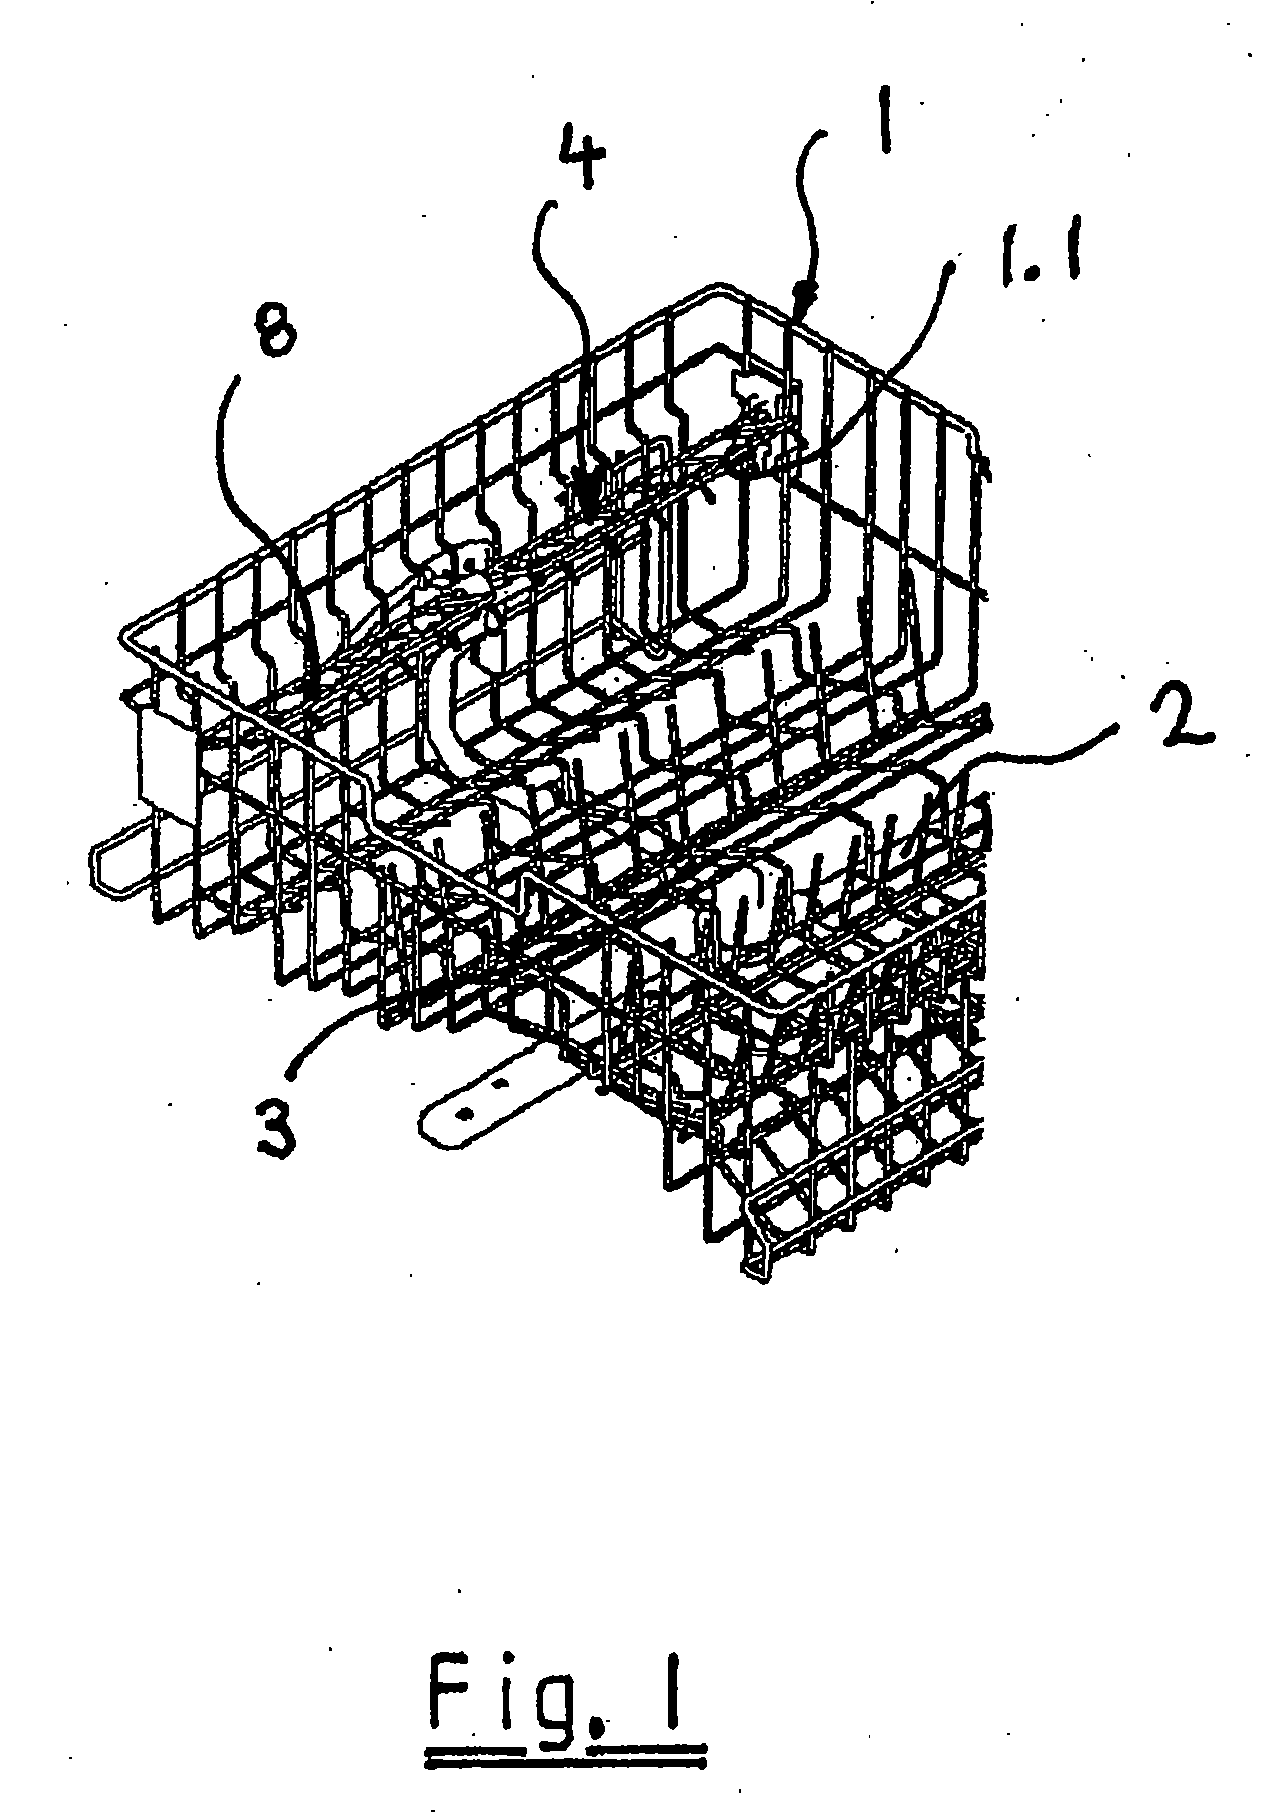 Crockery basket for a dishwasher machine, comprising an intensive washing zone